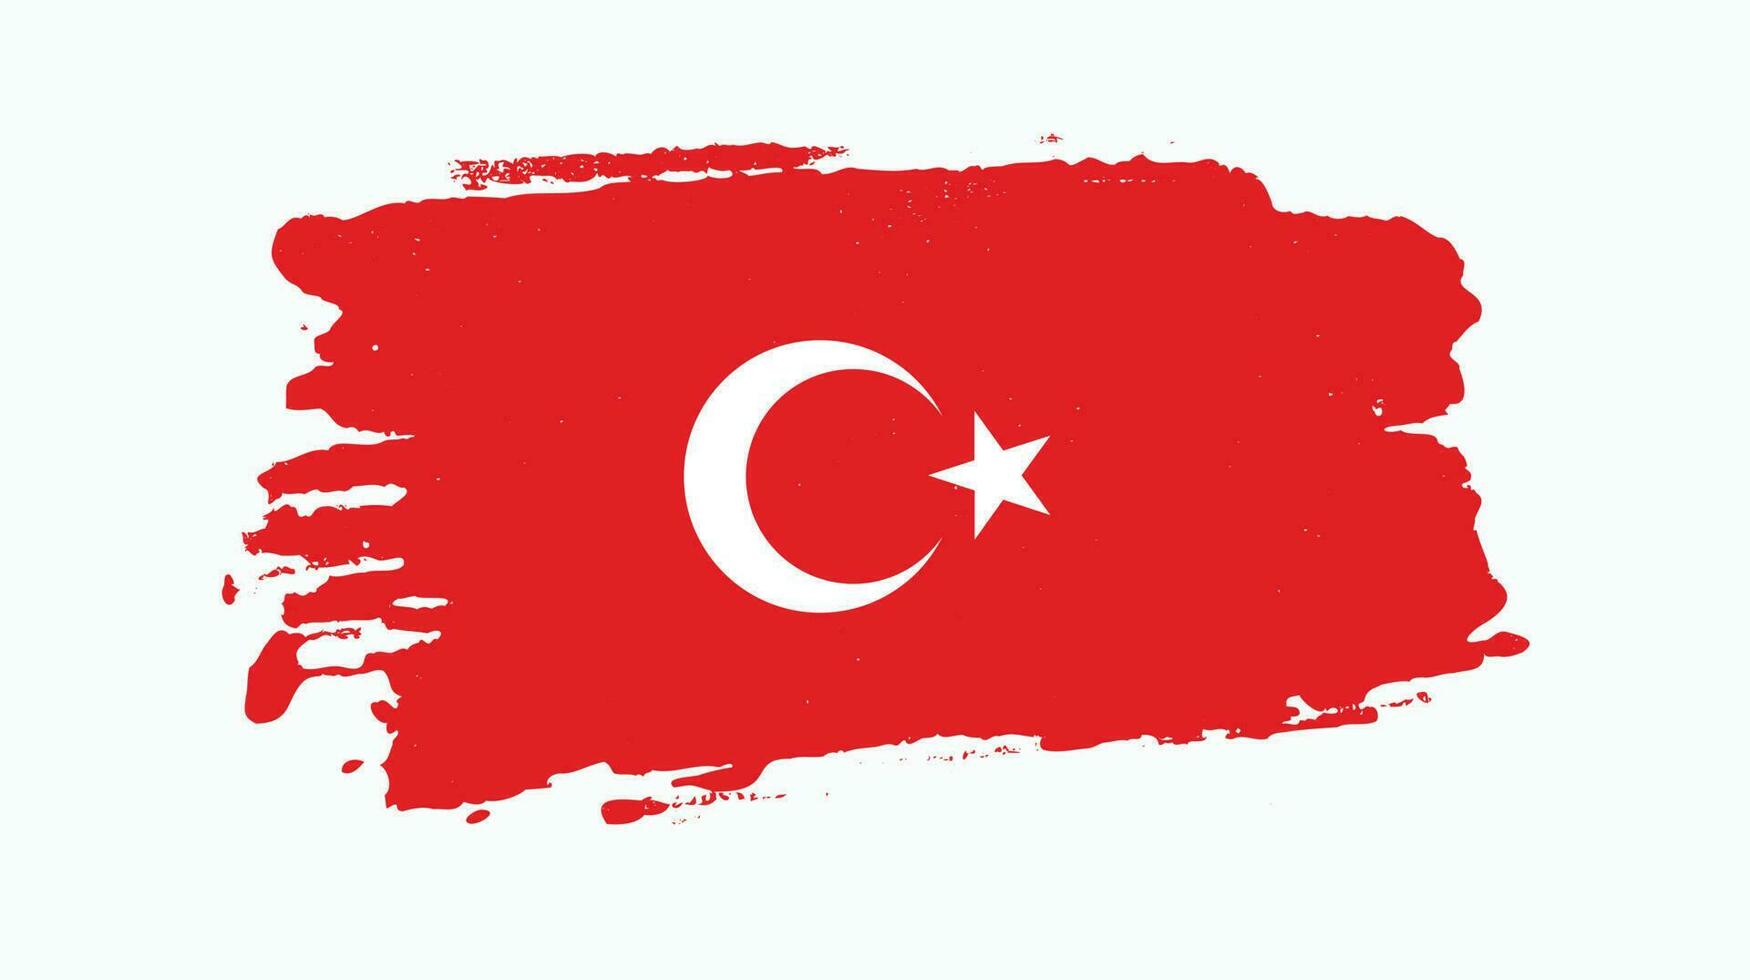 New distressed Turkey grunge flag vector